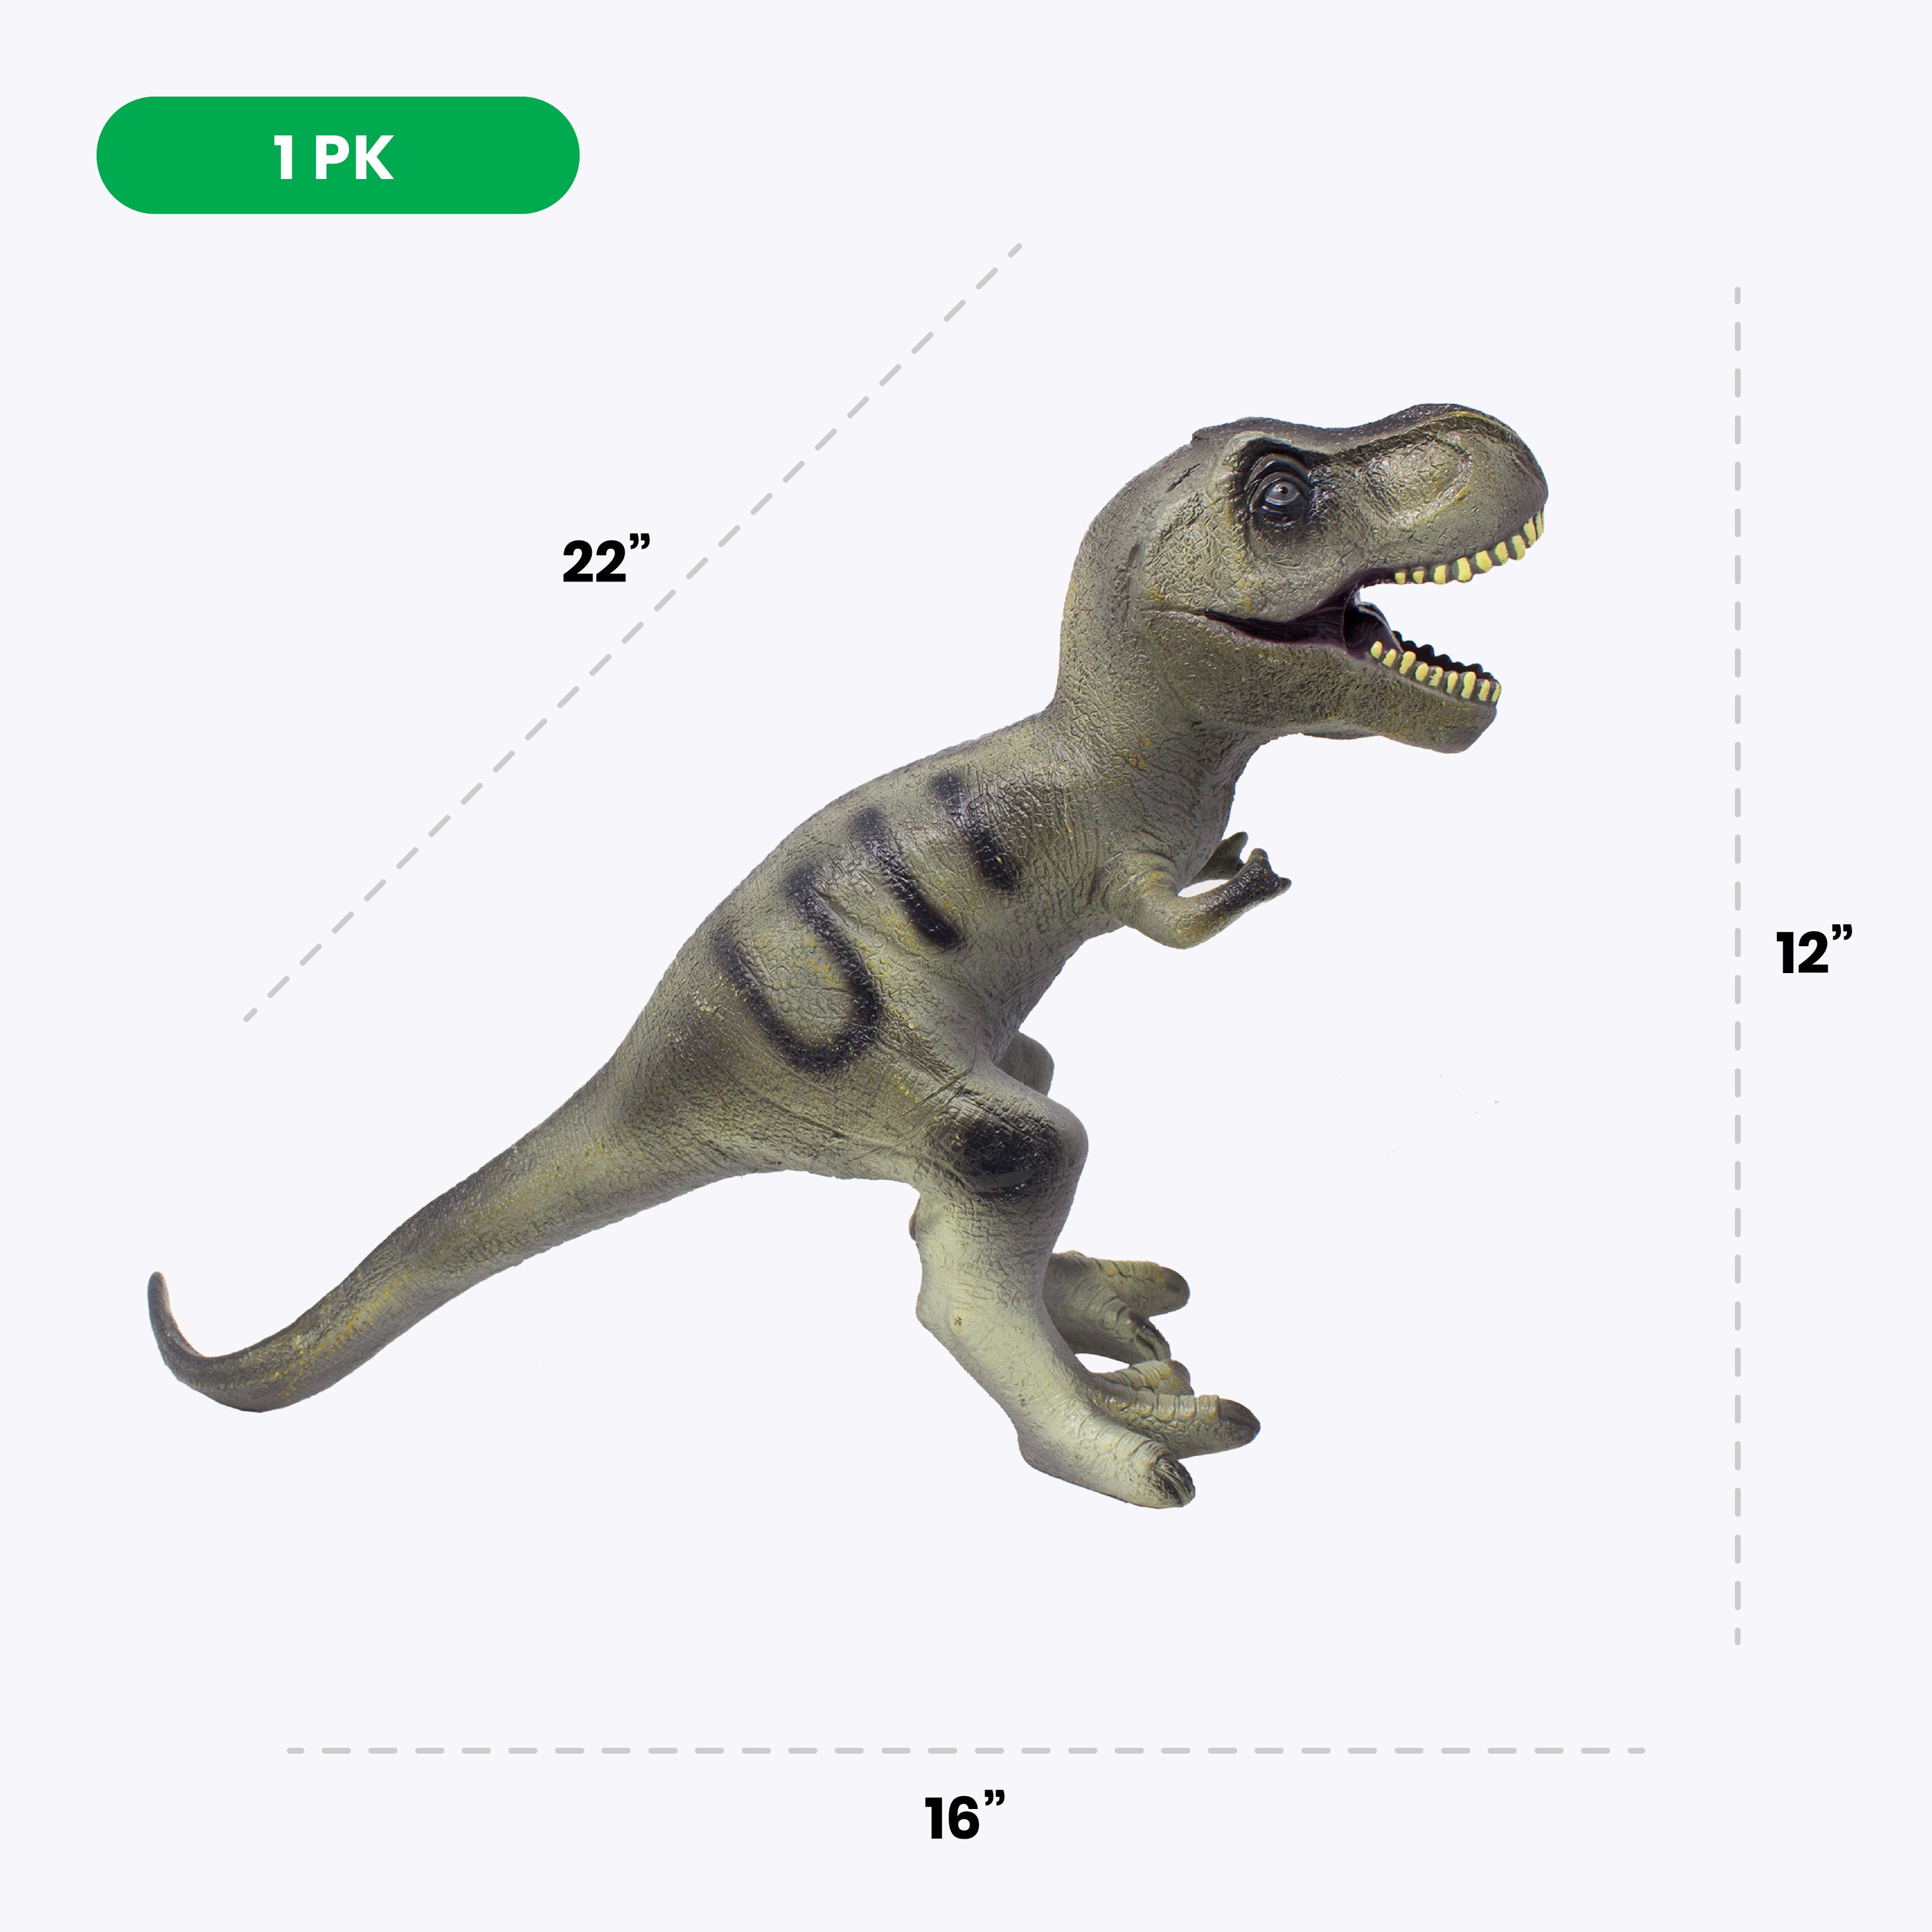 Boley Jumbo Monster Jumbo Dinosaur Toy - Big Educational Dinosaur Action Figure, Designed for Rough Play - Dinosaur Party Toy, and Toddler Dinosaur Gift